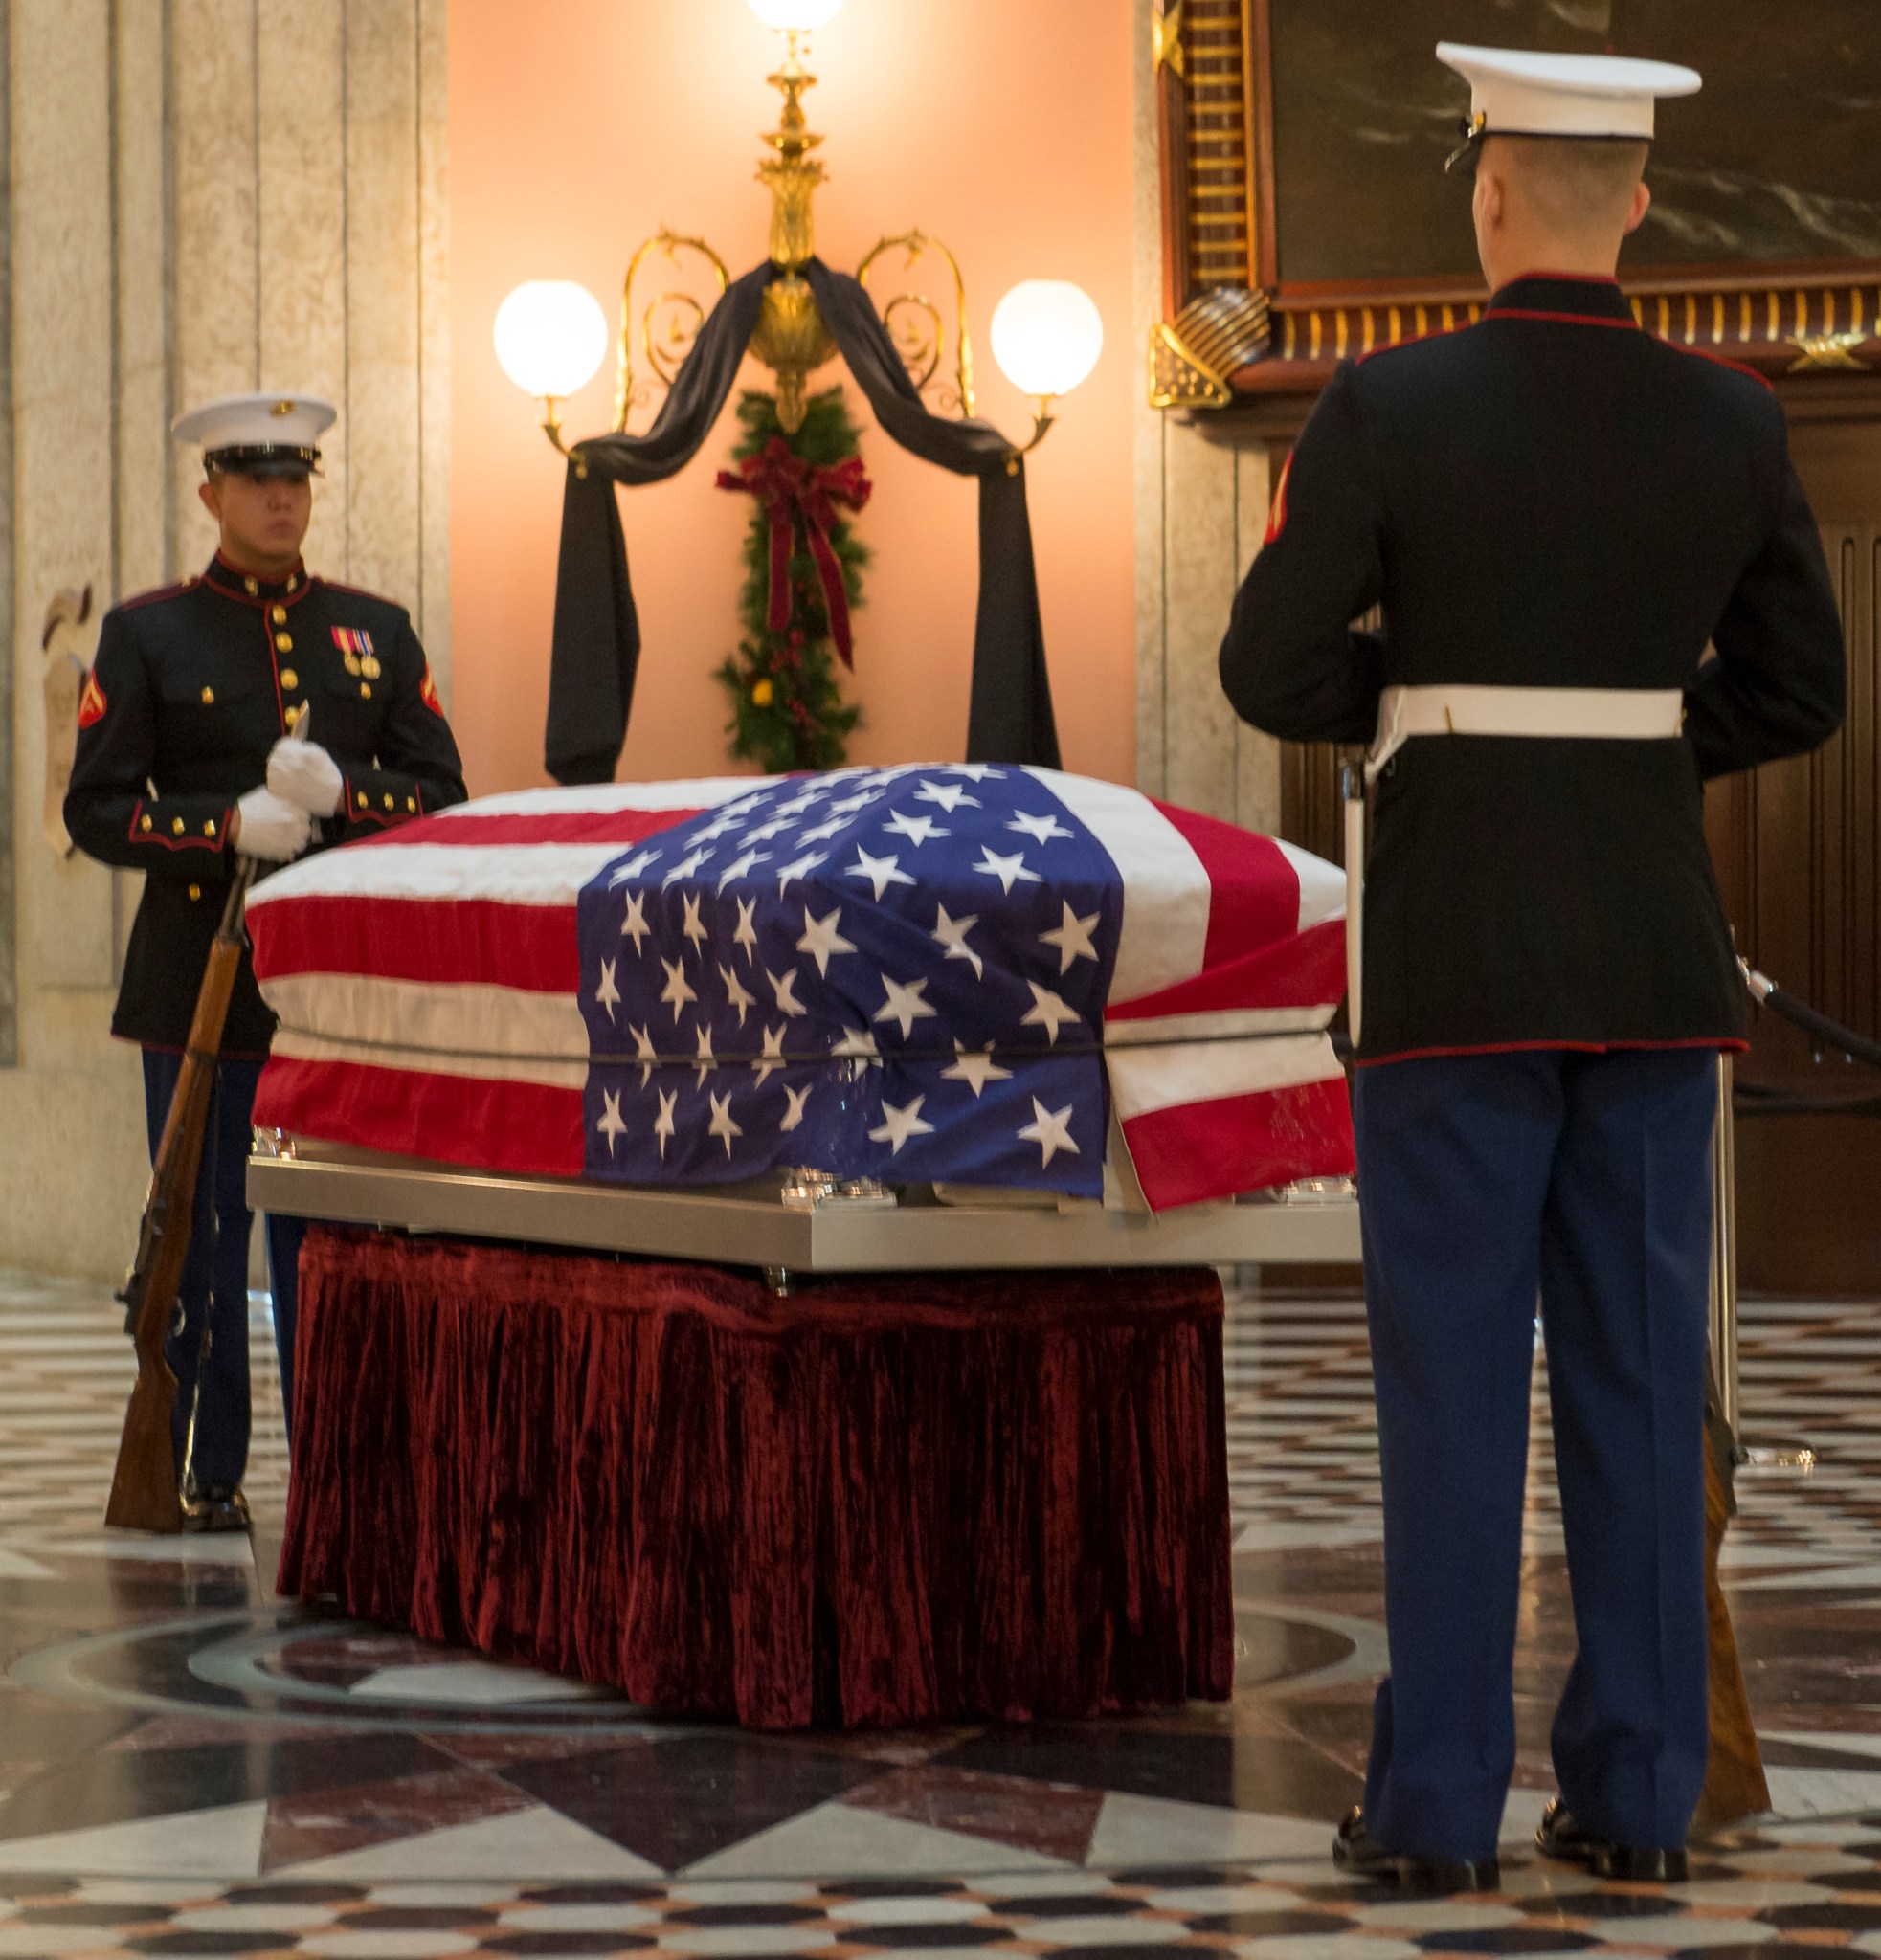 Former astronaut and U.S. Senator John Glenn lies in repose